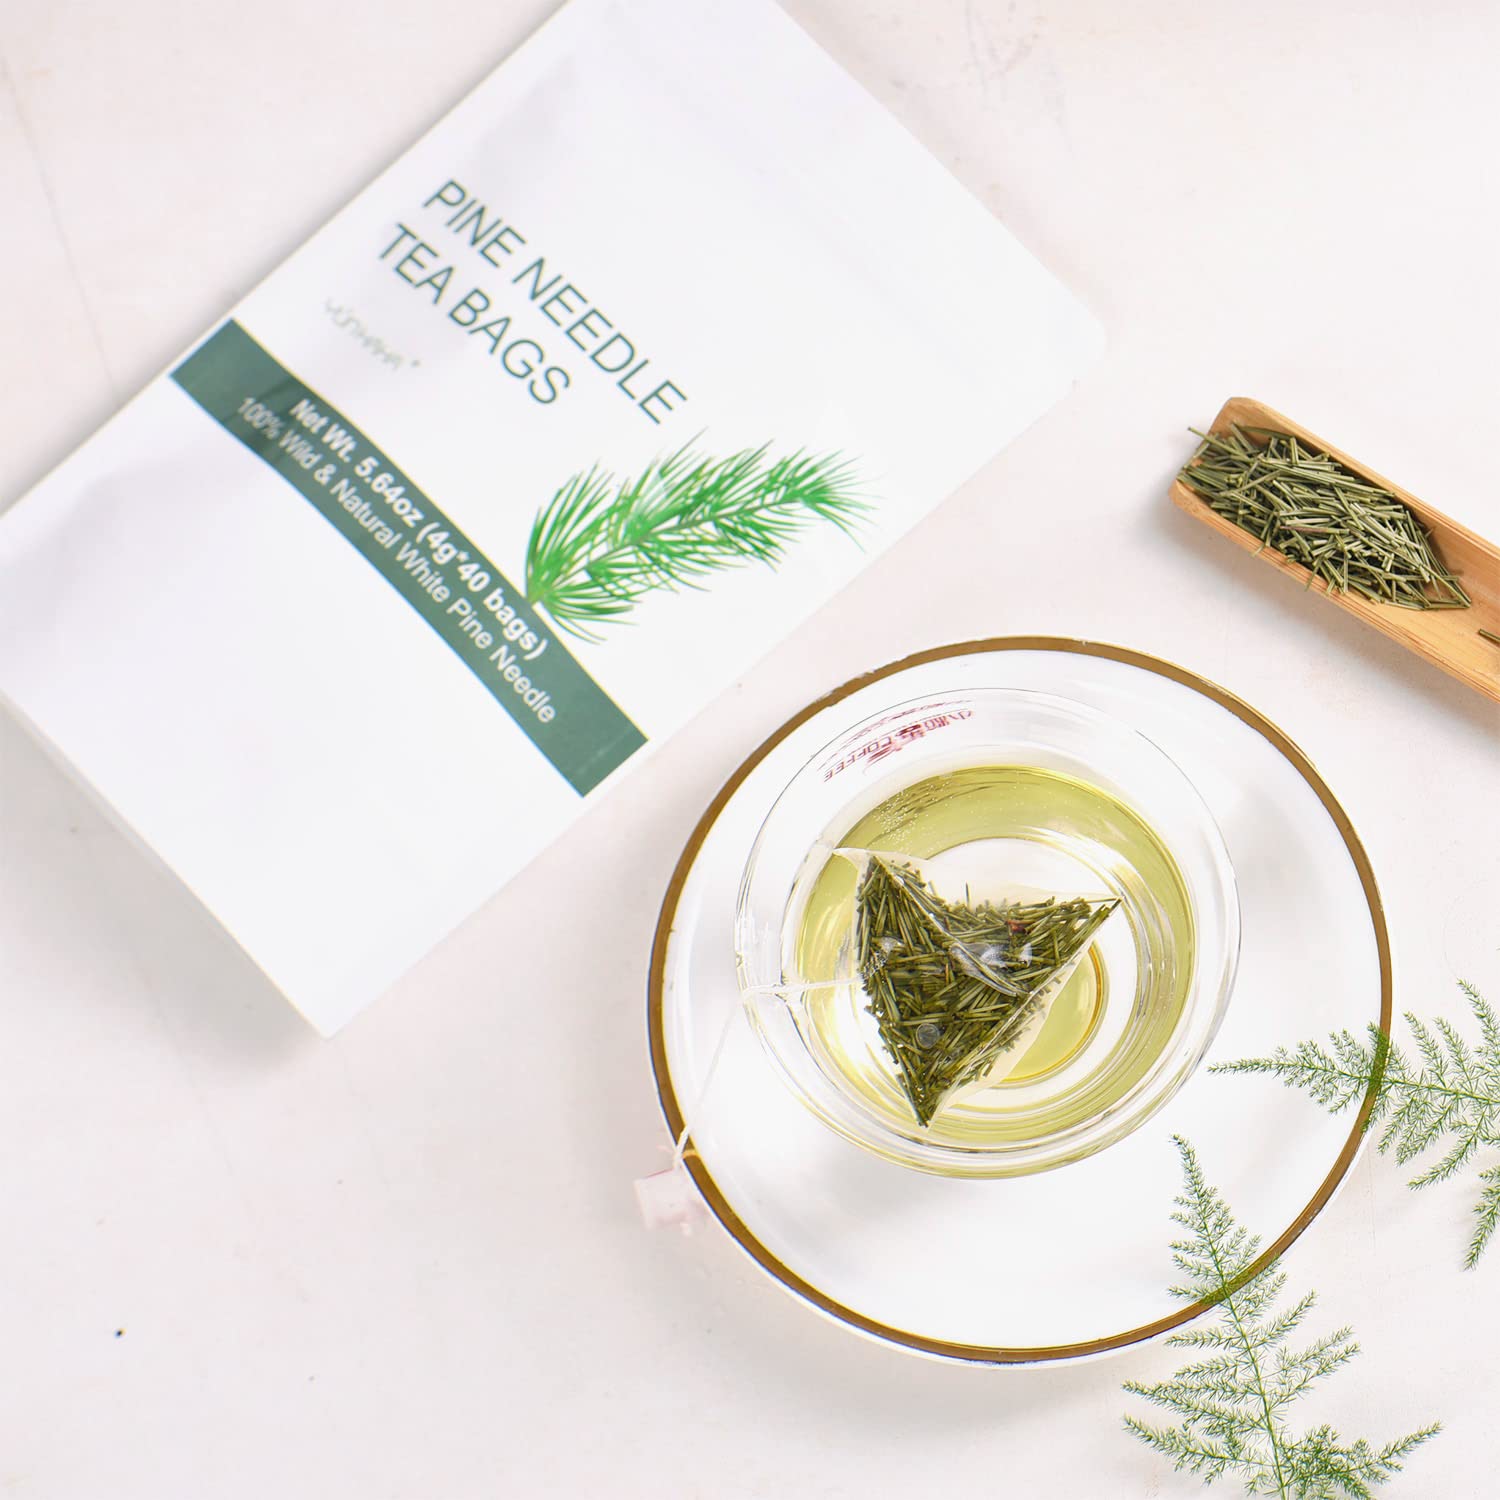 Wild Dried White Pine Needle Tea- 40 bags, 4g/bag- 100% Natural Pure Pine Needles Herbal Tea - Caffeine free- Cut & Sifted- Non-GMO - Immune Support